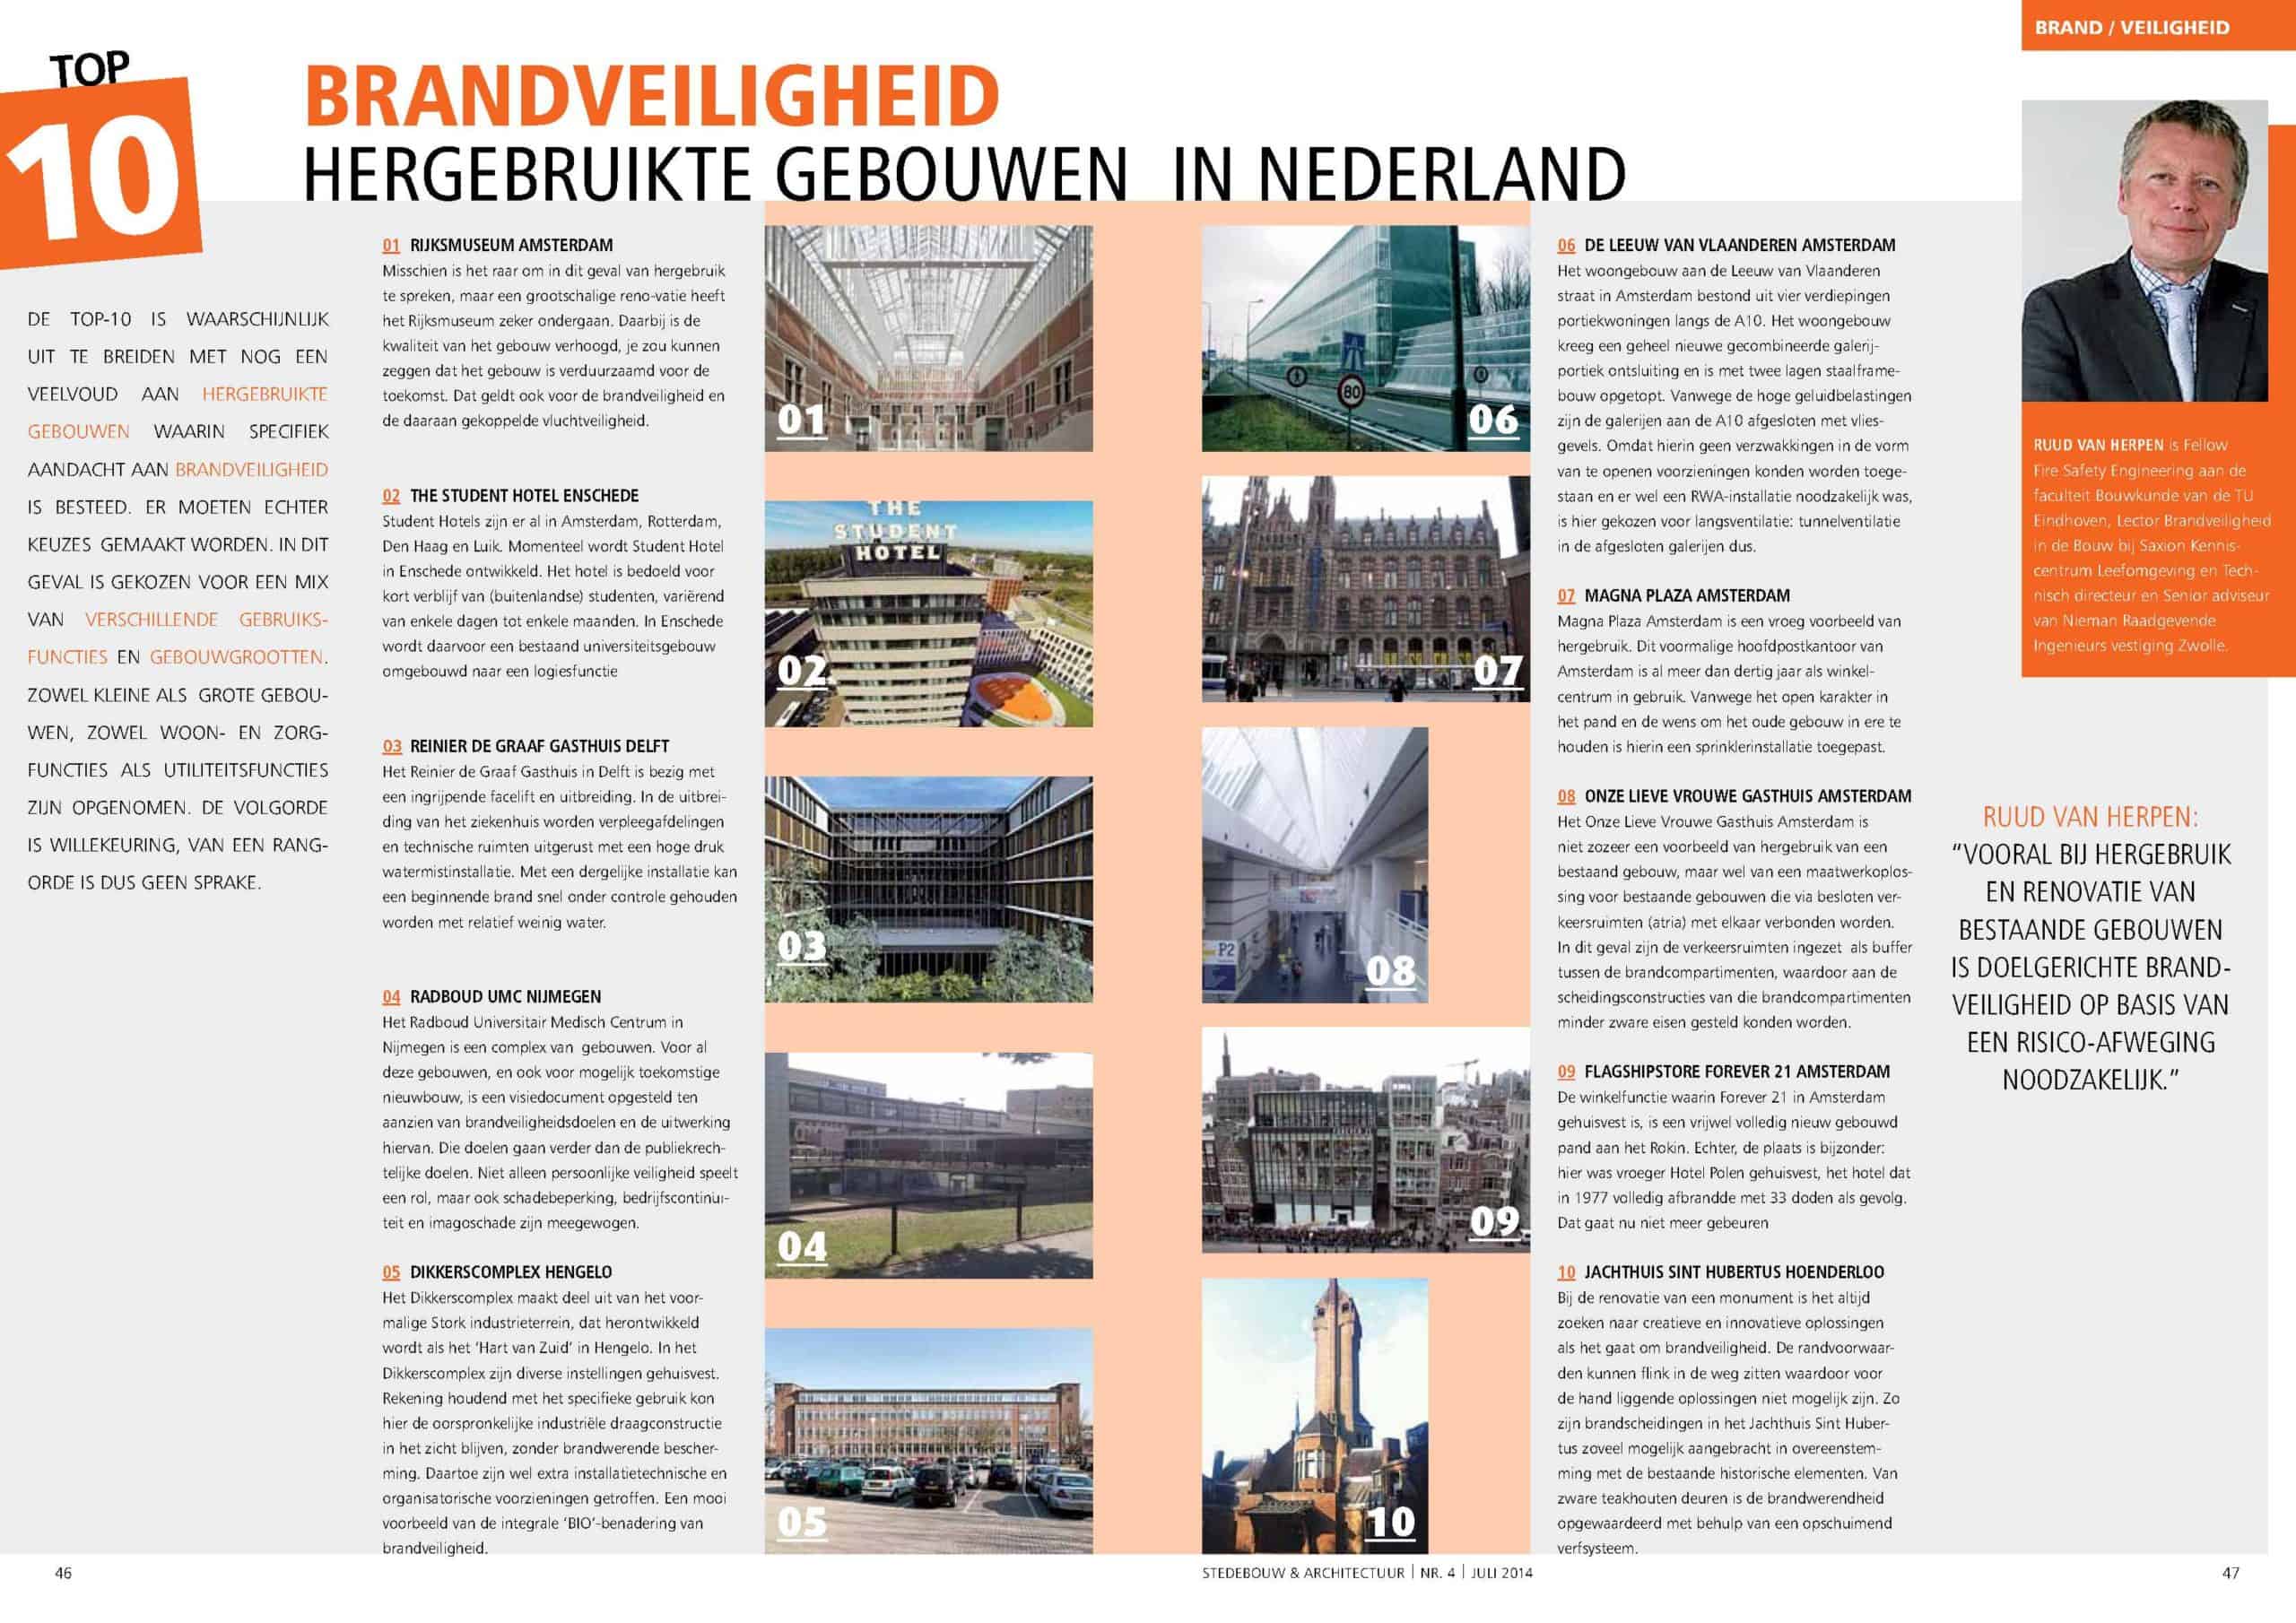 Top 10 Brandveiligheid hergebruikte gebouwen in Nederland